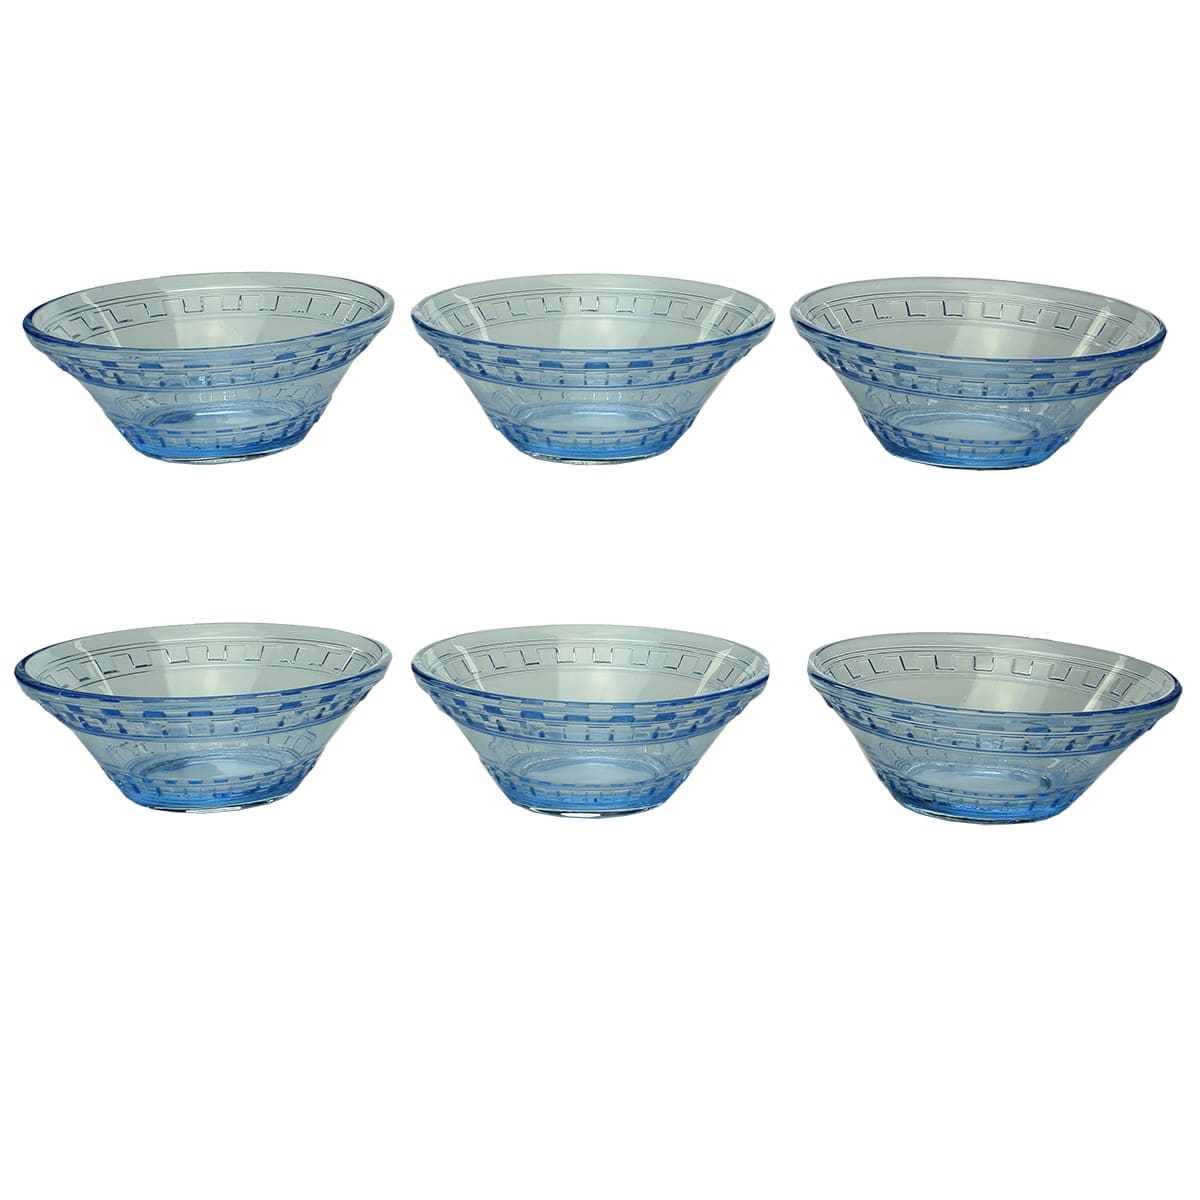 Glassware. Six small blue glass bowls.